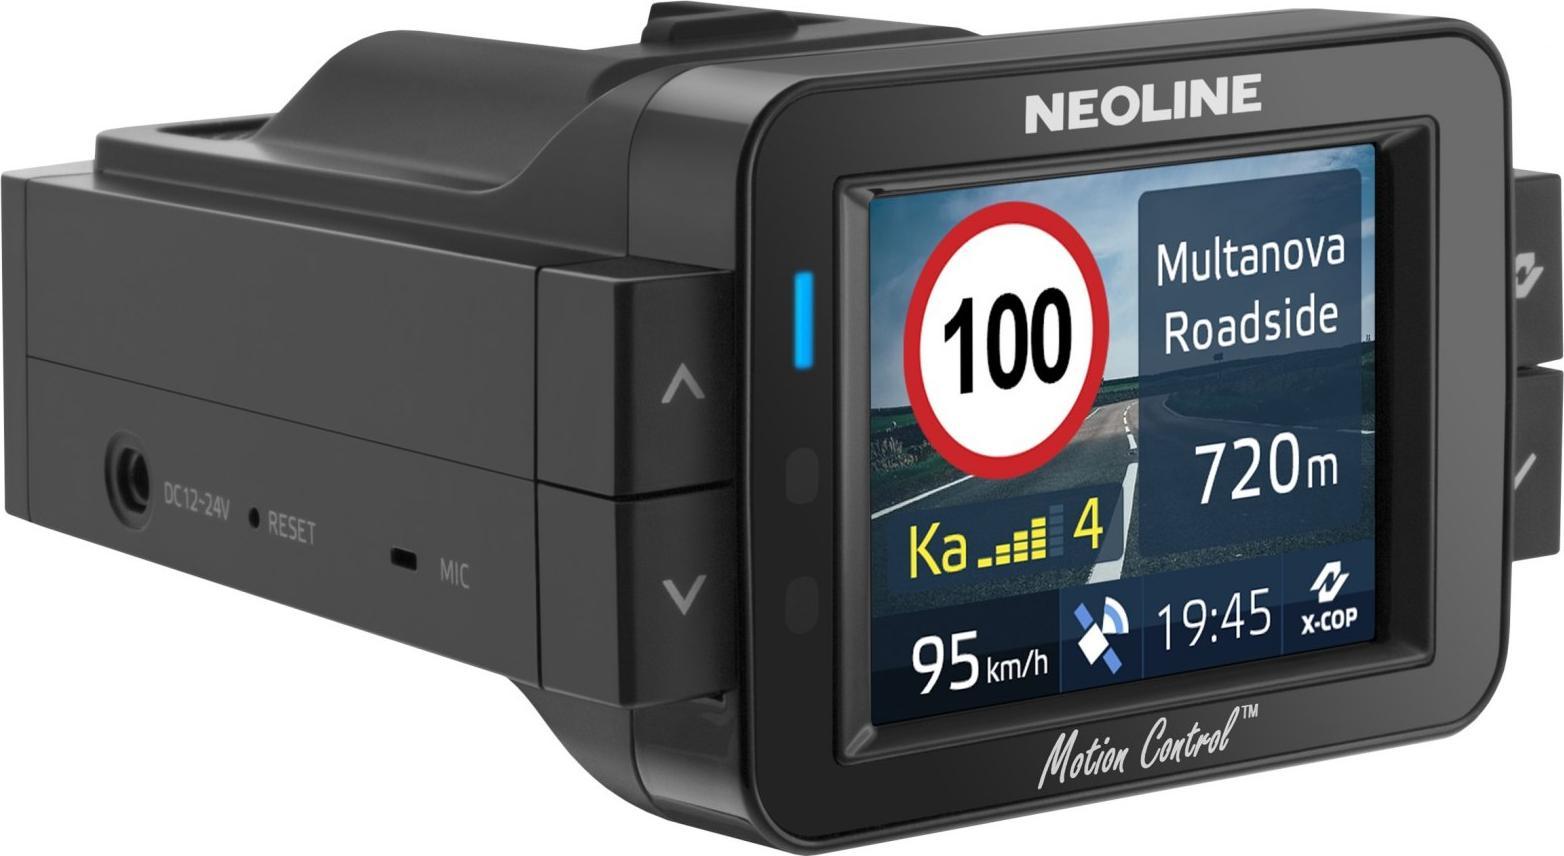 Neoline X-COP 9100s video recorder